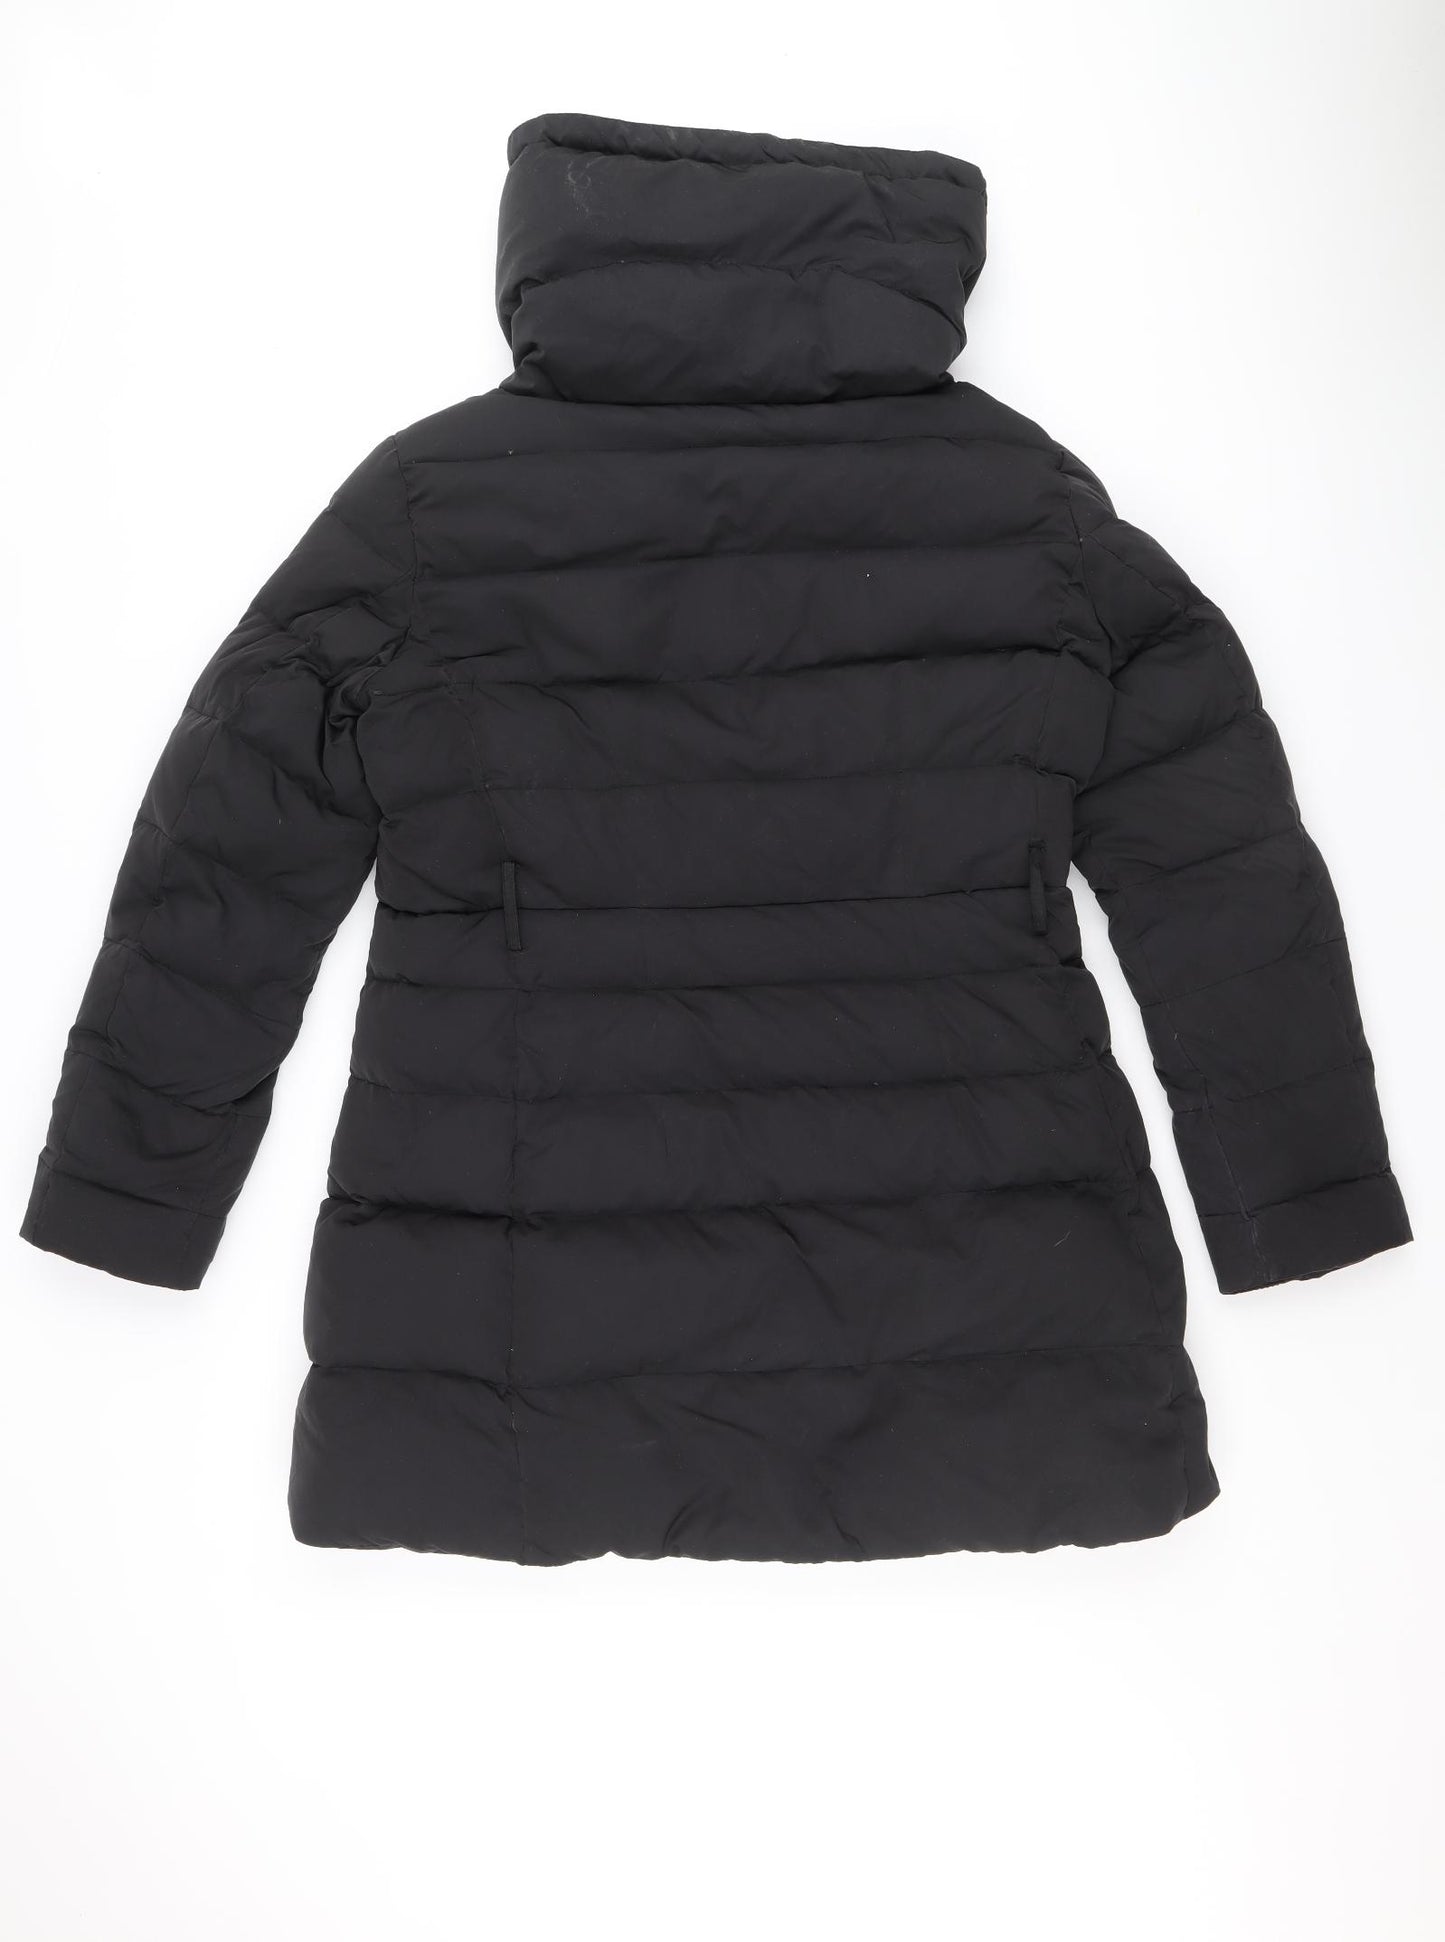 Zara Womens Black Puffer Jacket Jacket Size XL Toggle